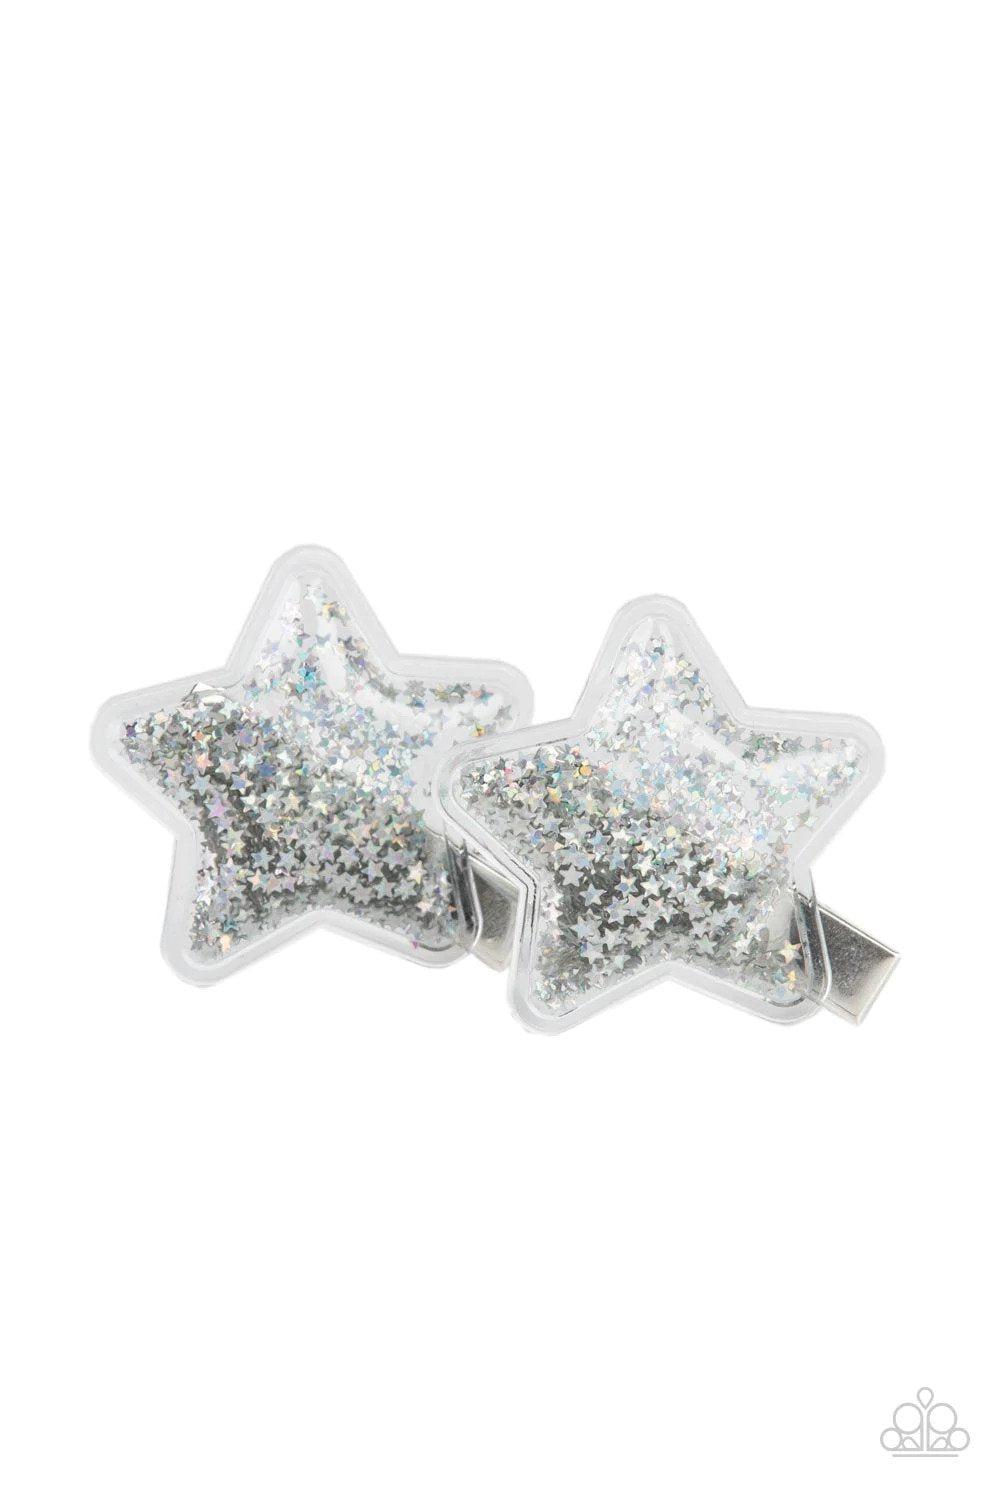 Stellar-ista Silver Star Hair Clip - Paparazzi Accessories- lightbox - CarasShop.com - $5 Jewelry by Cara Jewels